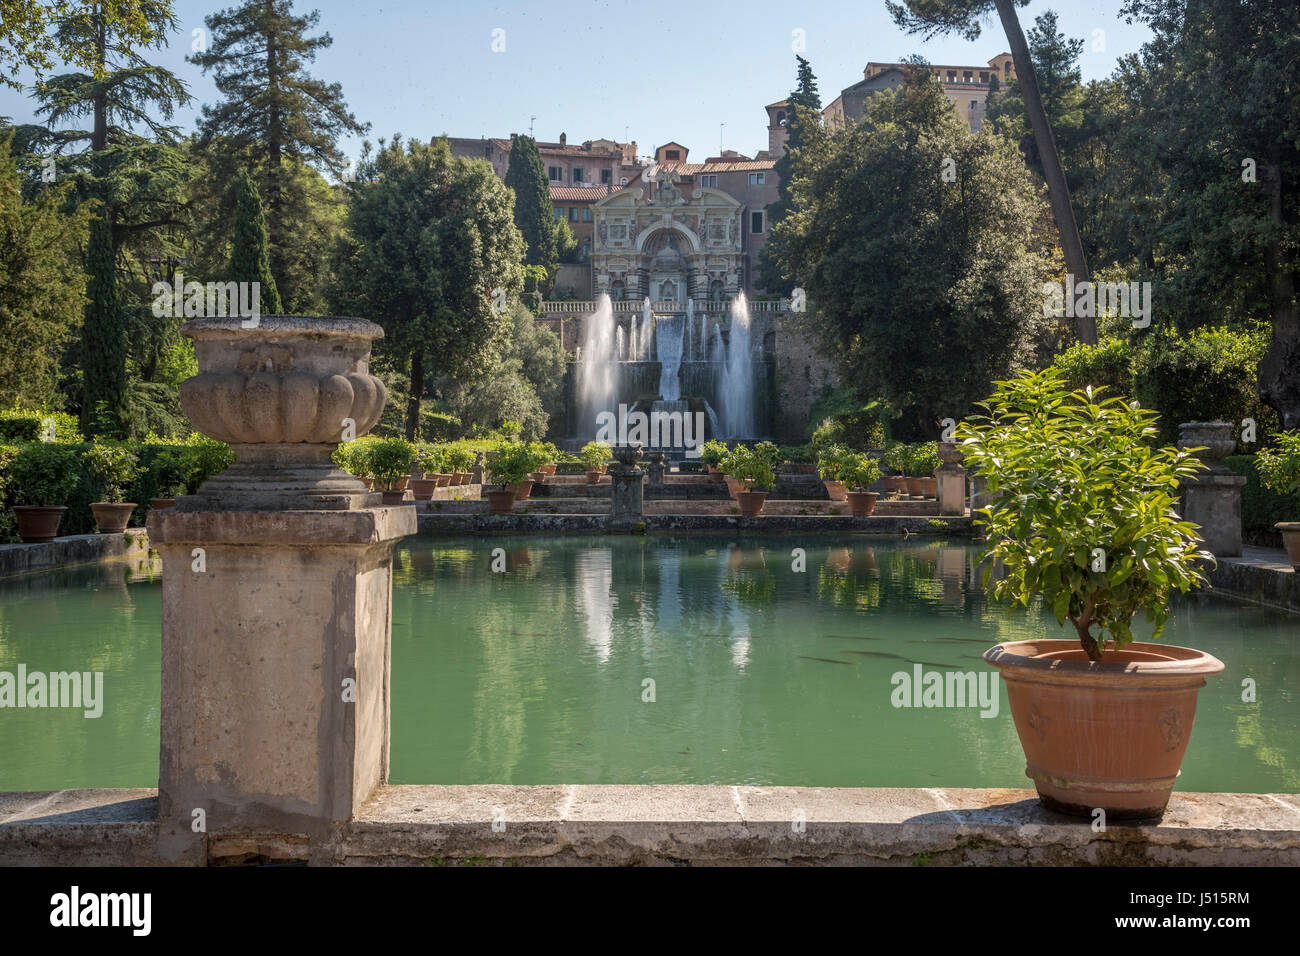 View towards the Fish Ponds, the Fountain of Neptune (Fontana di Nettuno) and the Fountain of the Organ, Villa d'Este, Tivoli, near Rome, Italy Stock Photo